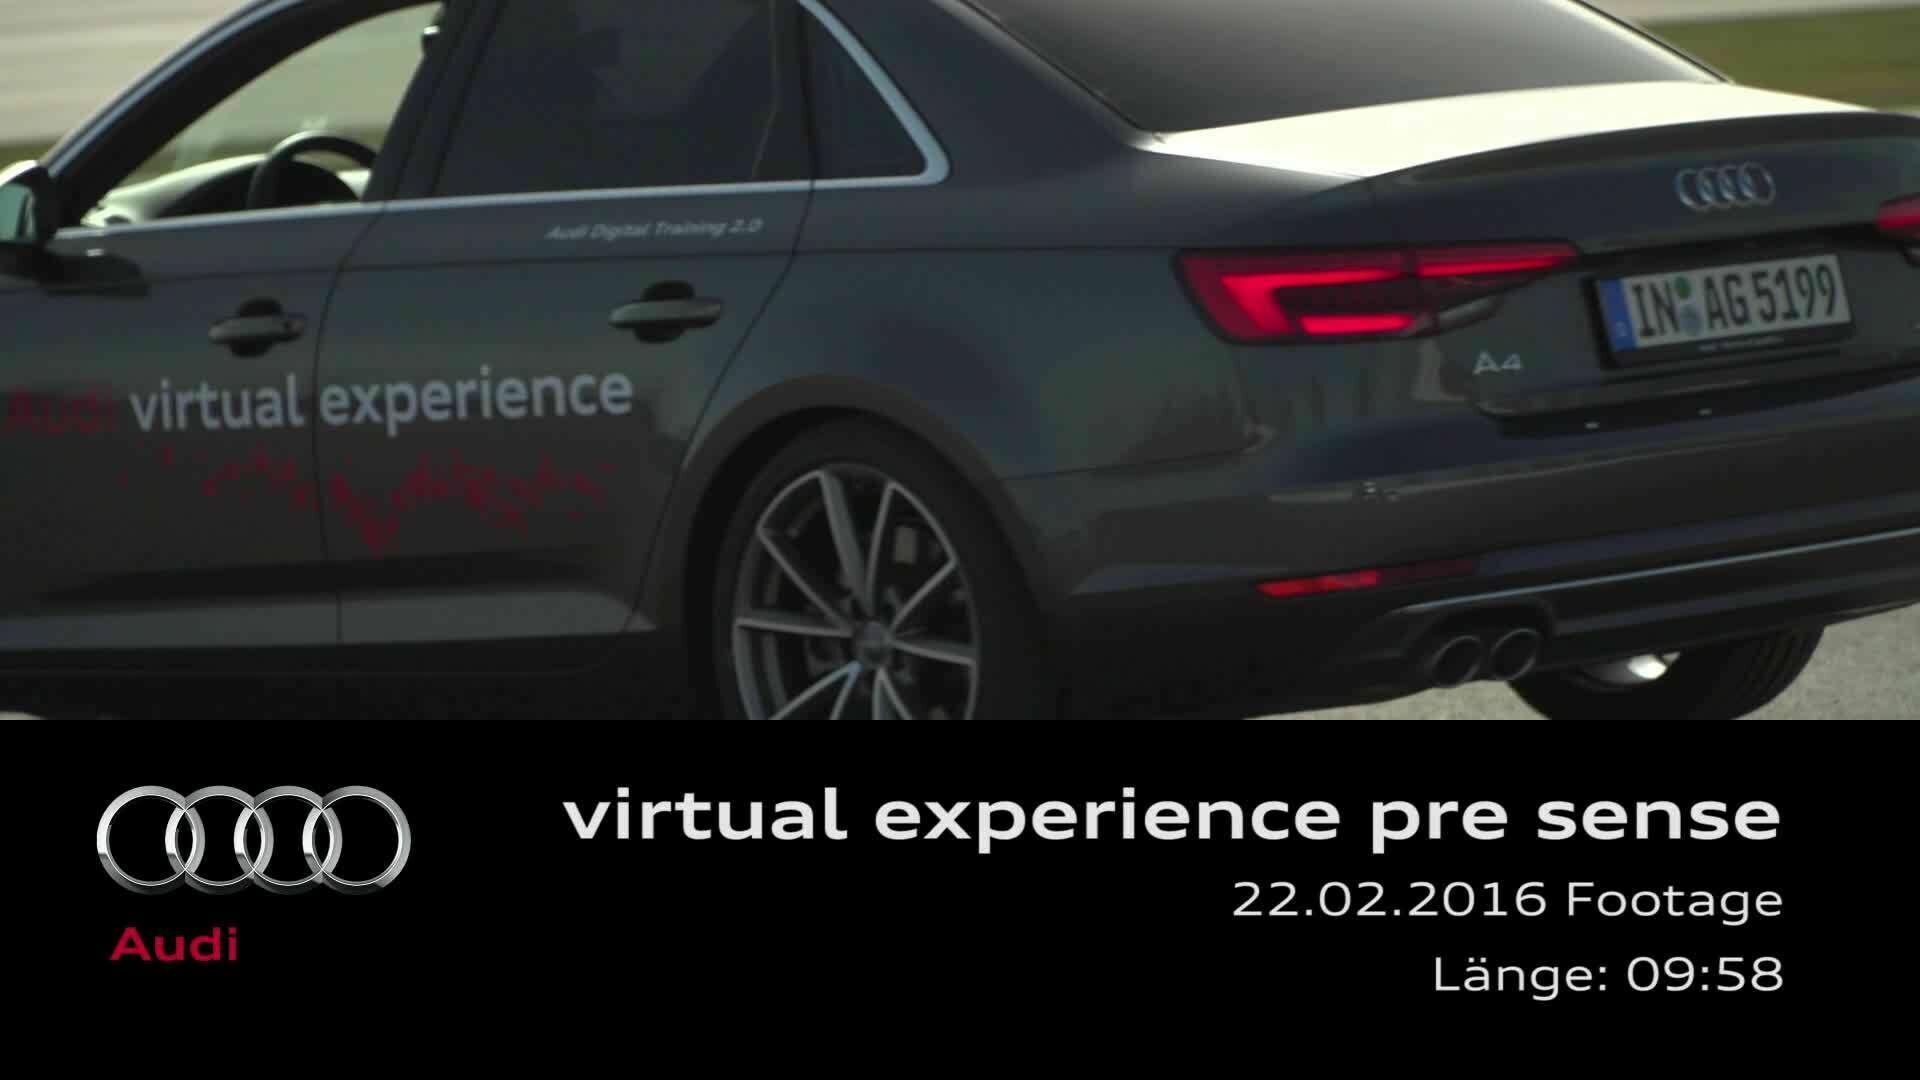 Virtual Experience pre sense Footage